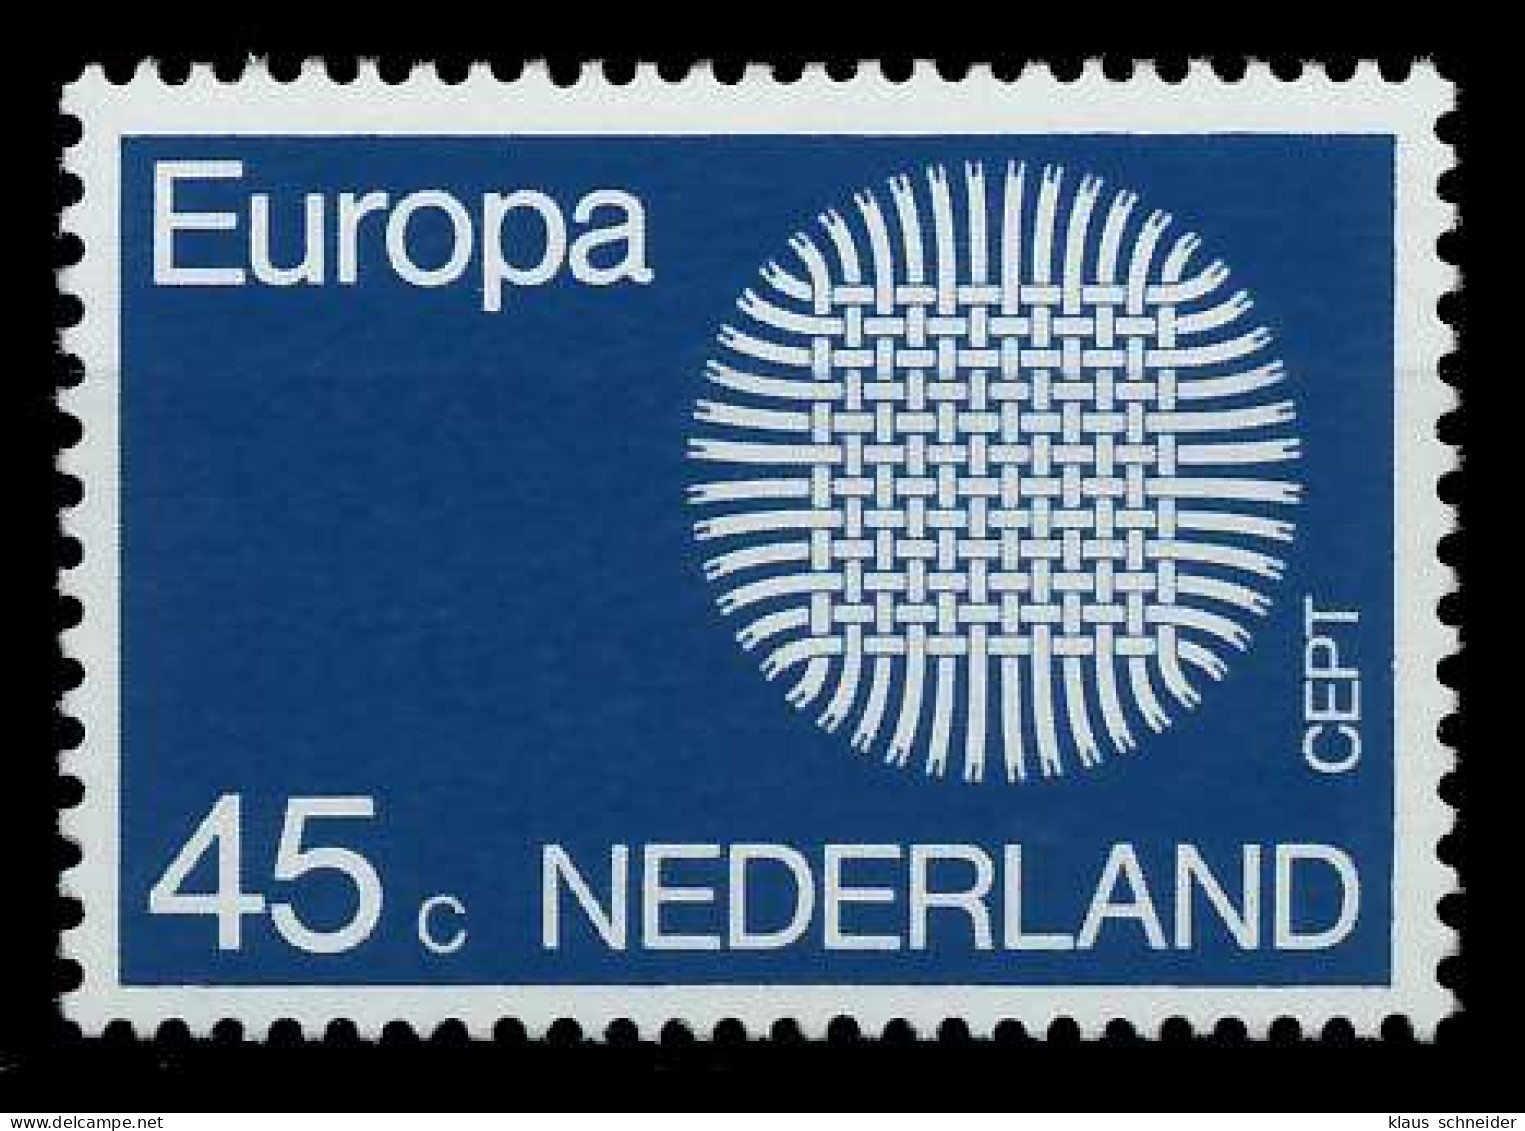 NIEDERLANDE 1970 Nr 943 Postfrisch SA6E9BA - Unused Stamps